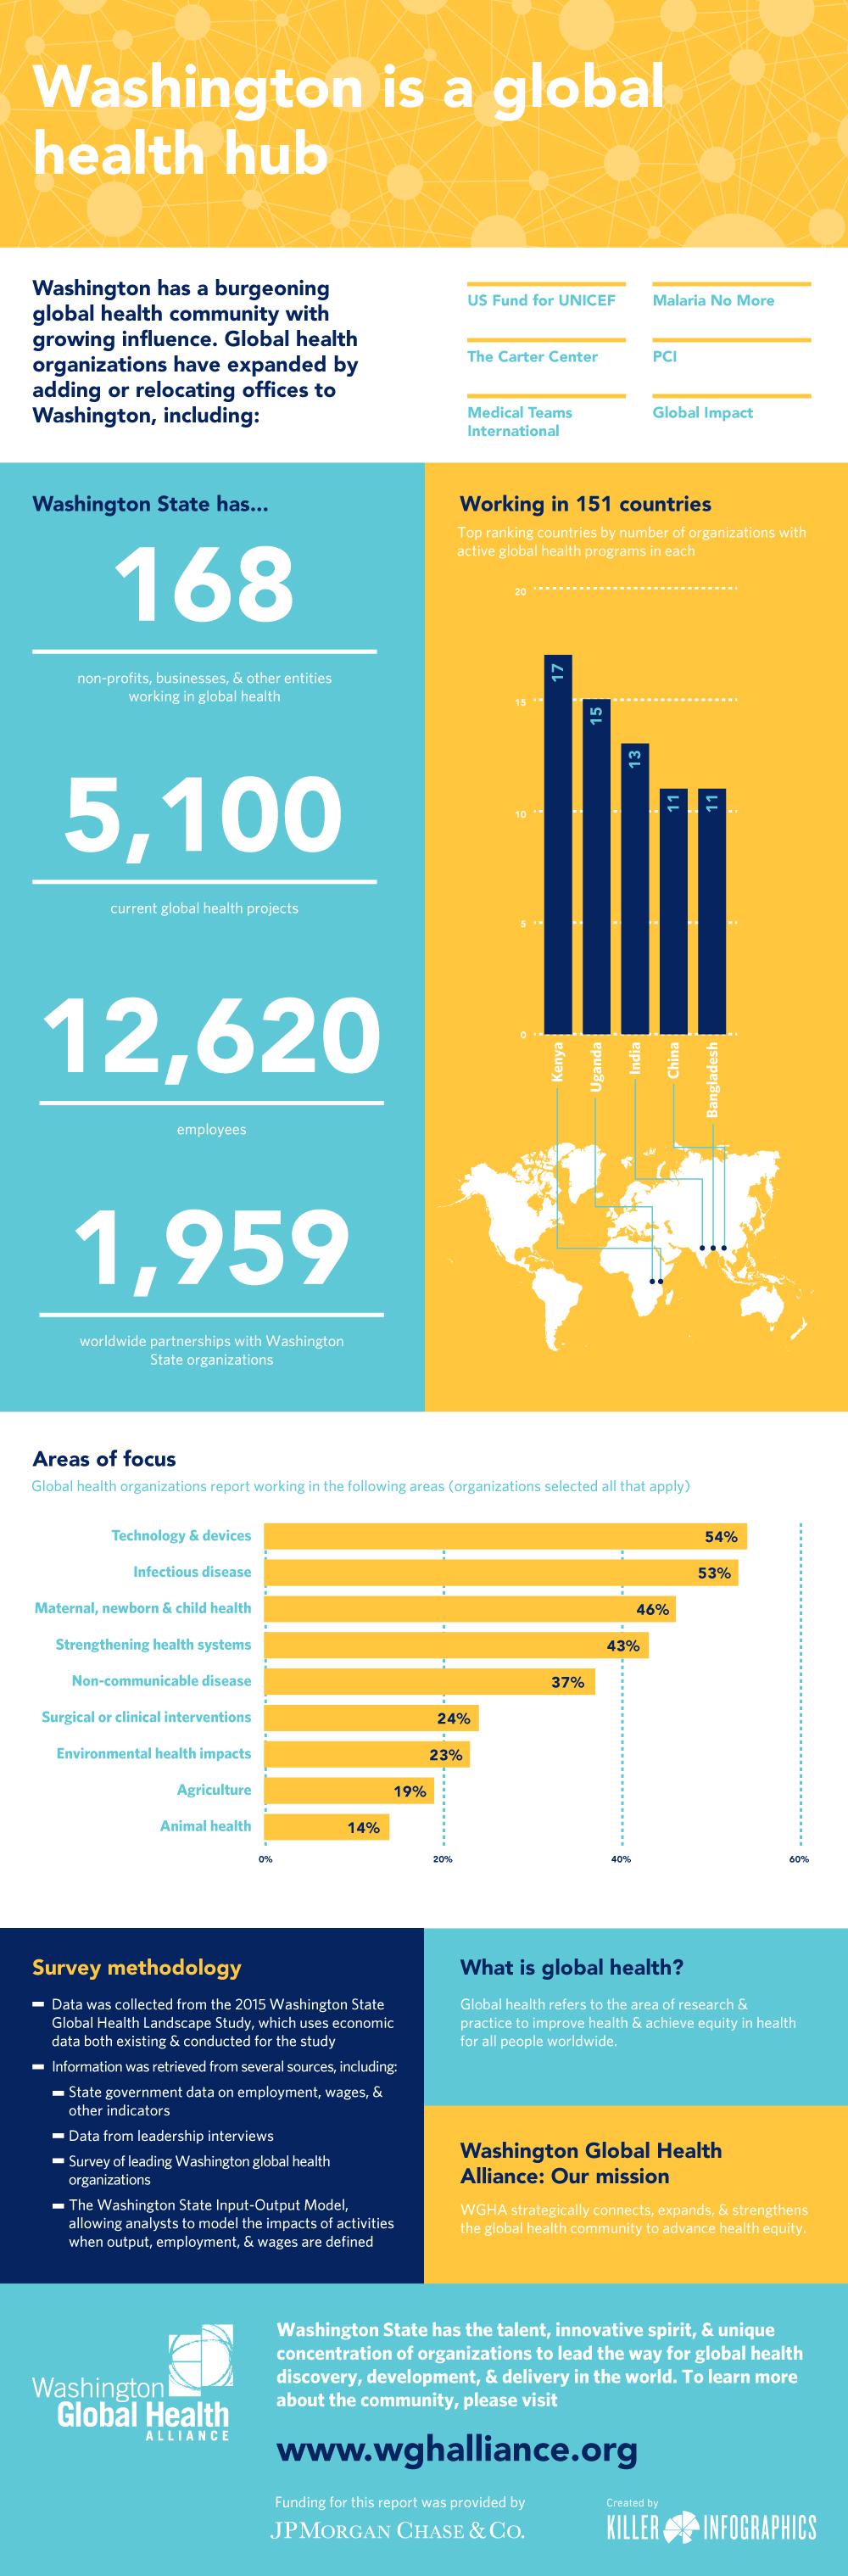 infographic of Washington State's global health hub